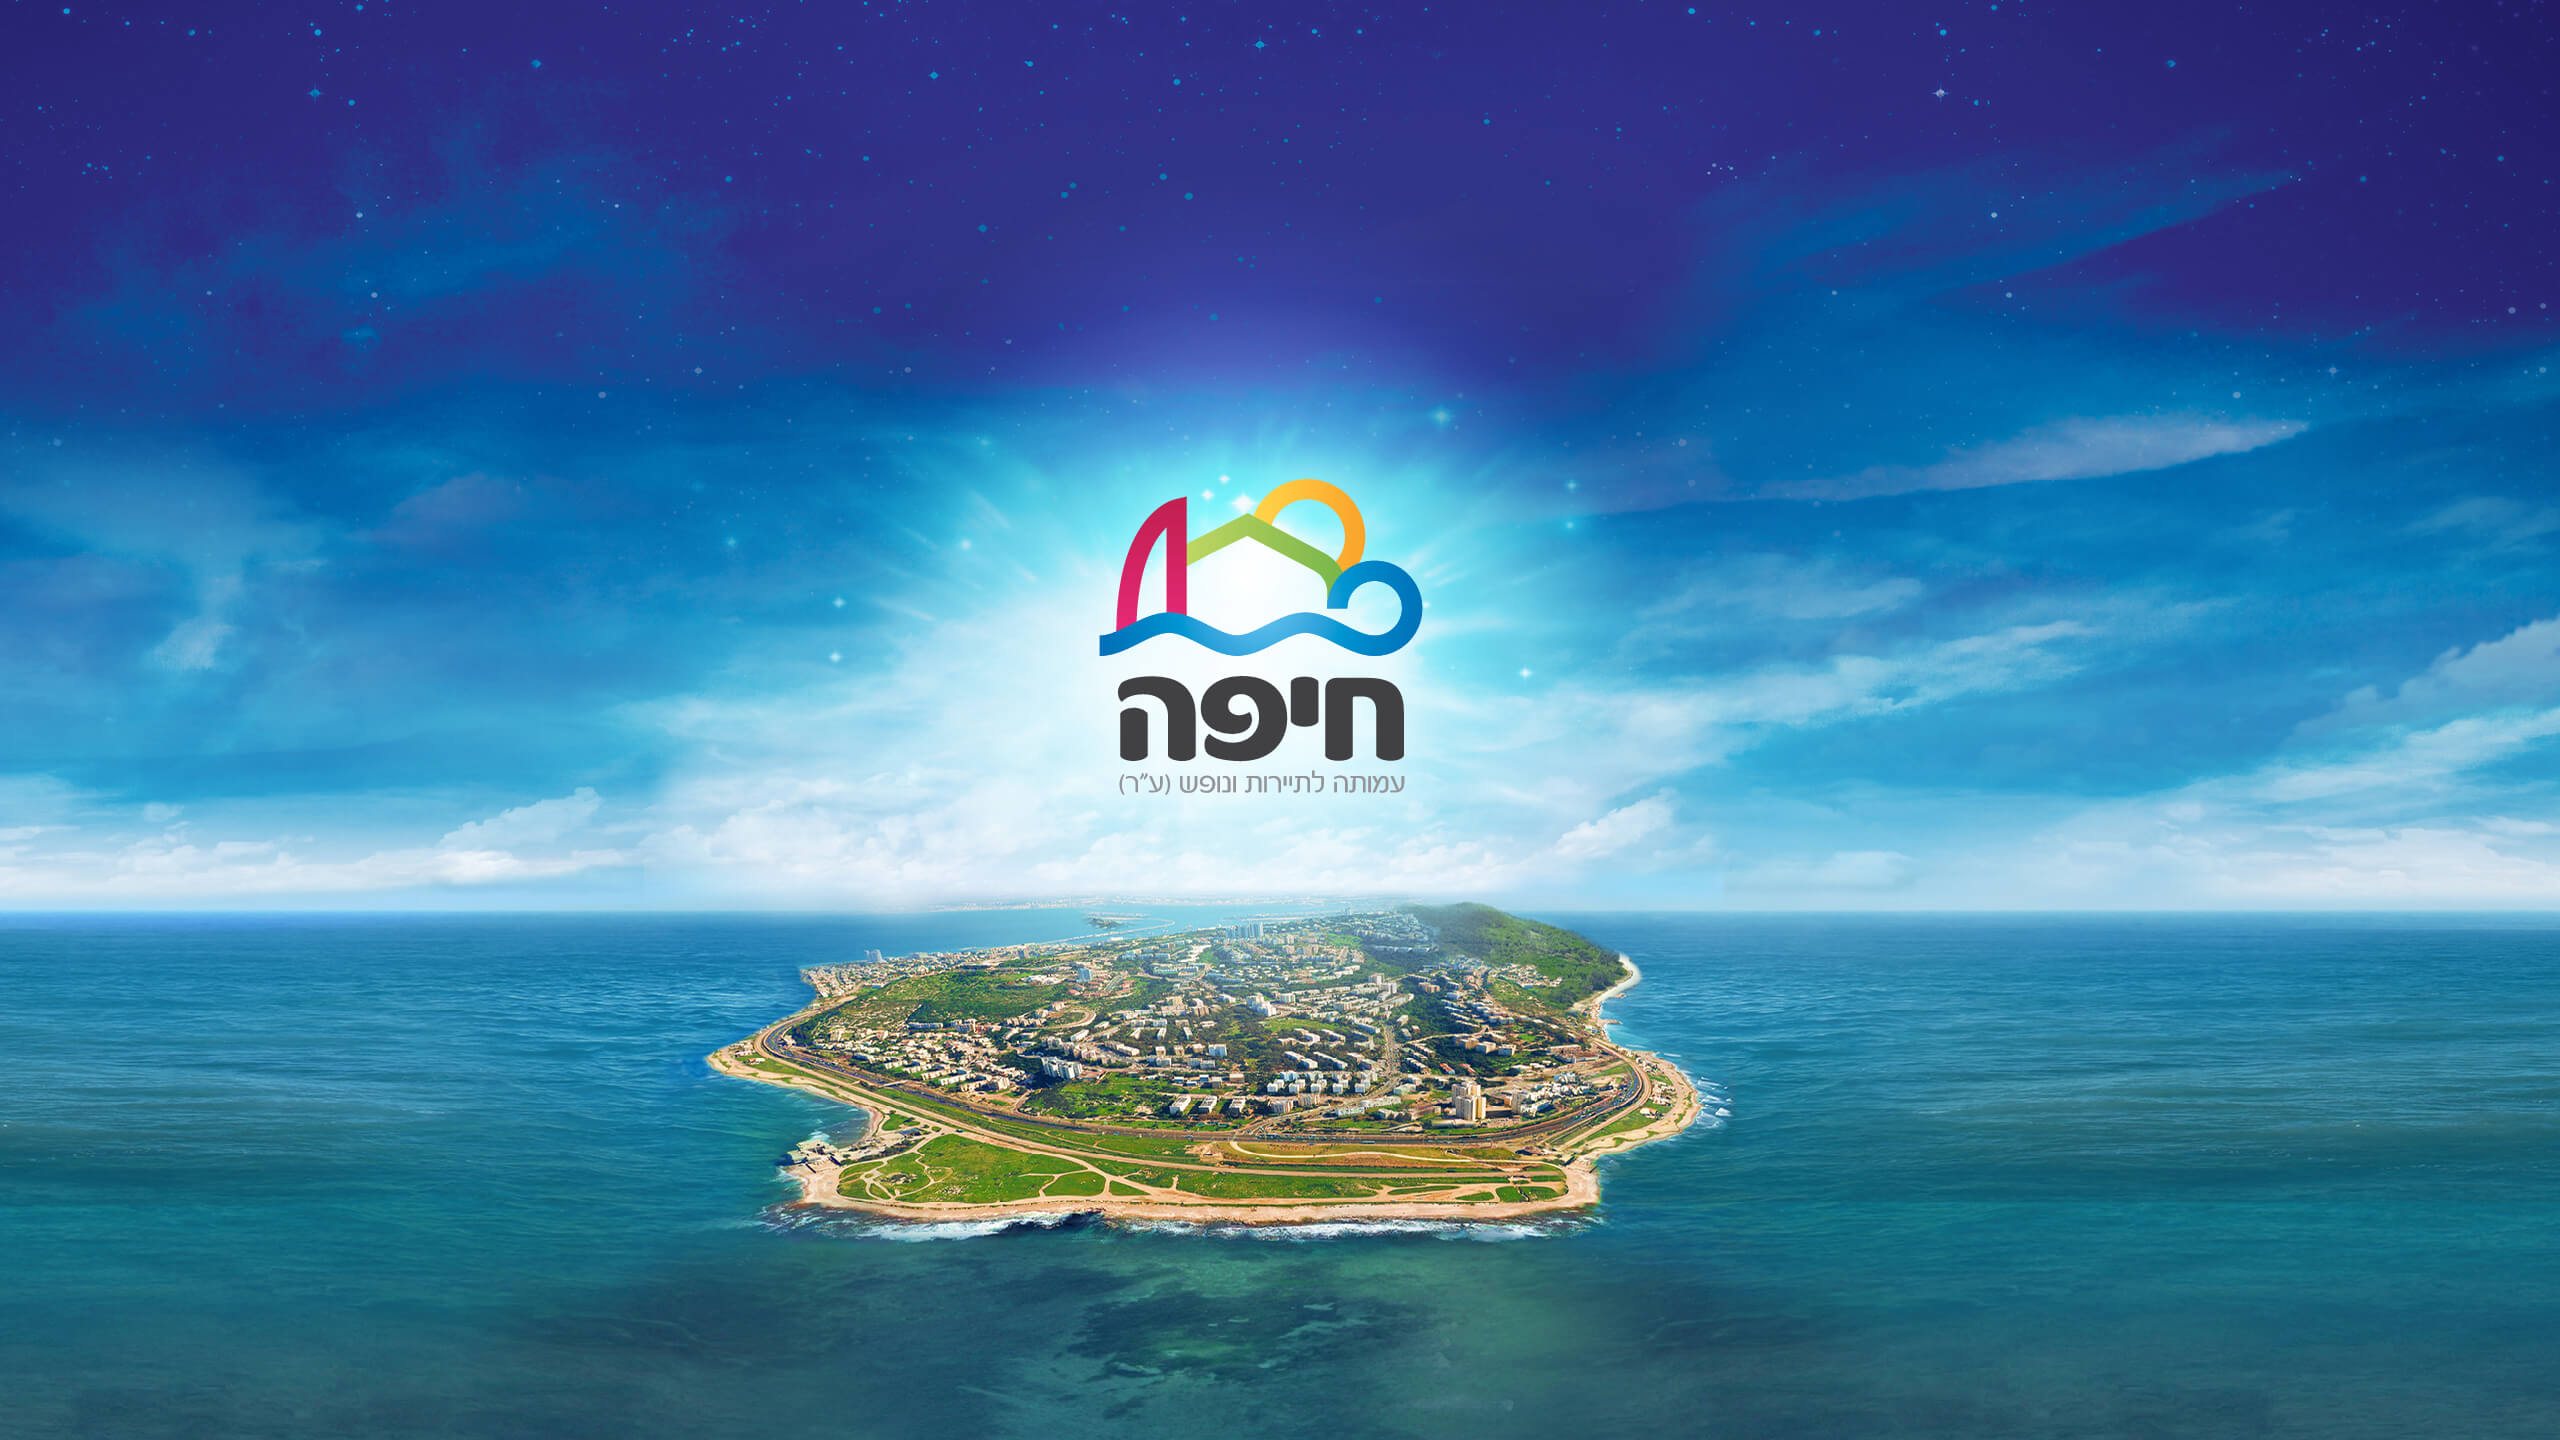 Haifa Tourism by Dotan-Lidgi